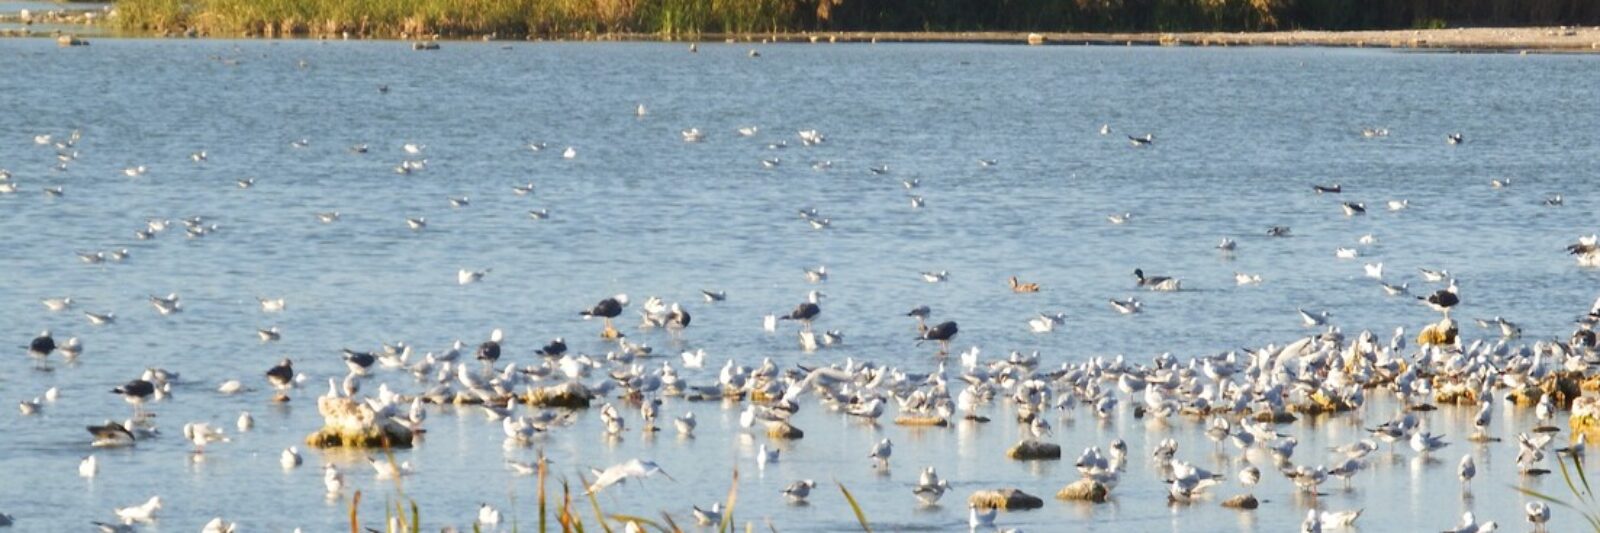 Aves migratorias en la Laguna de Navaseca